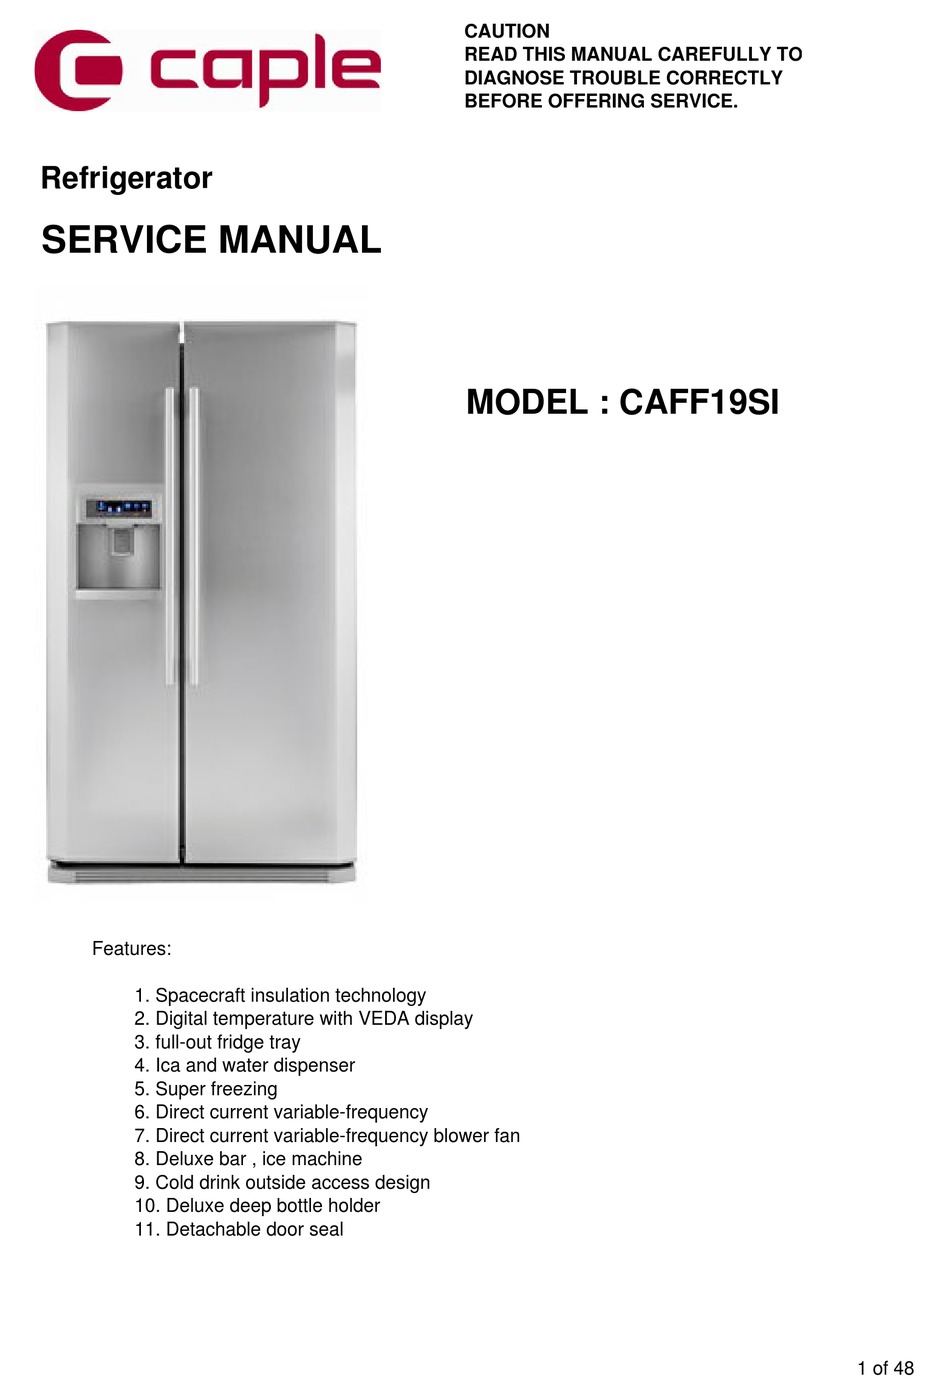 CAPLE CAFF19SI SERVICE MANUAL Pdf Download | ManualsLib